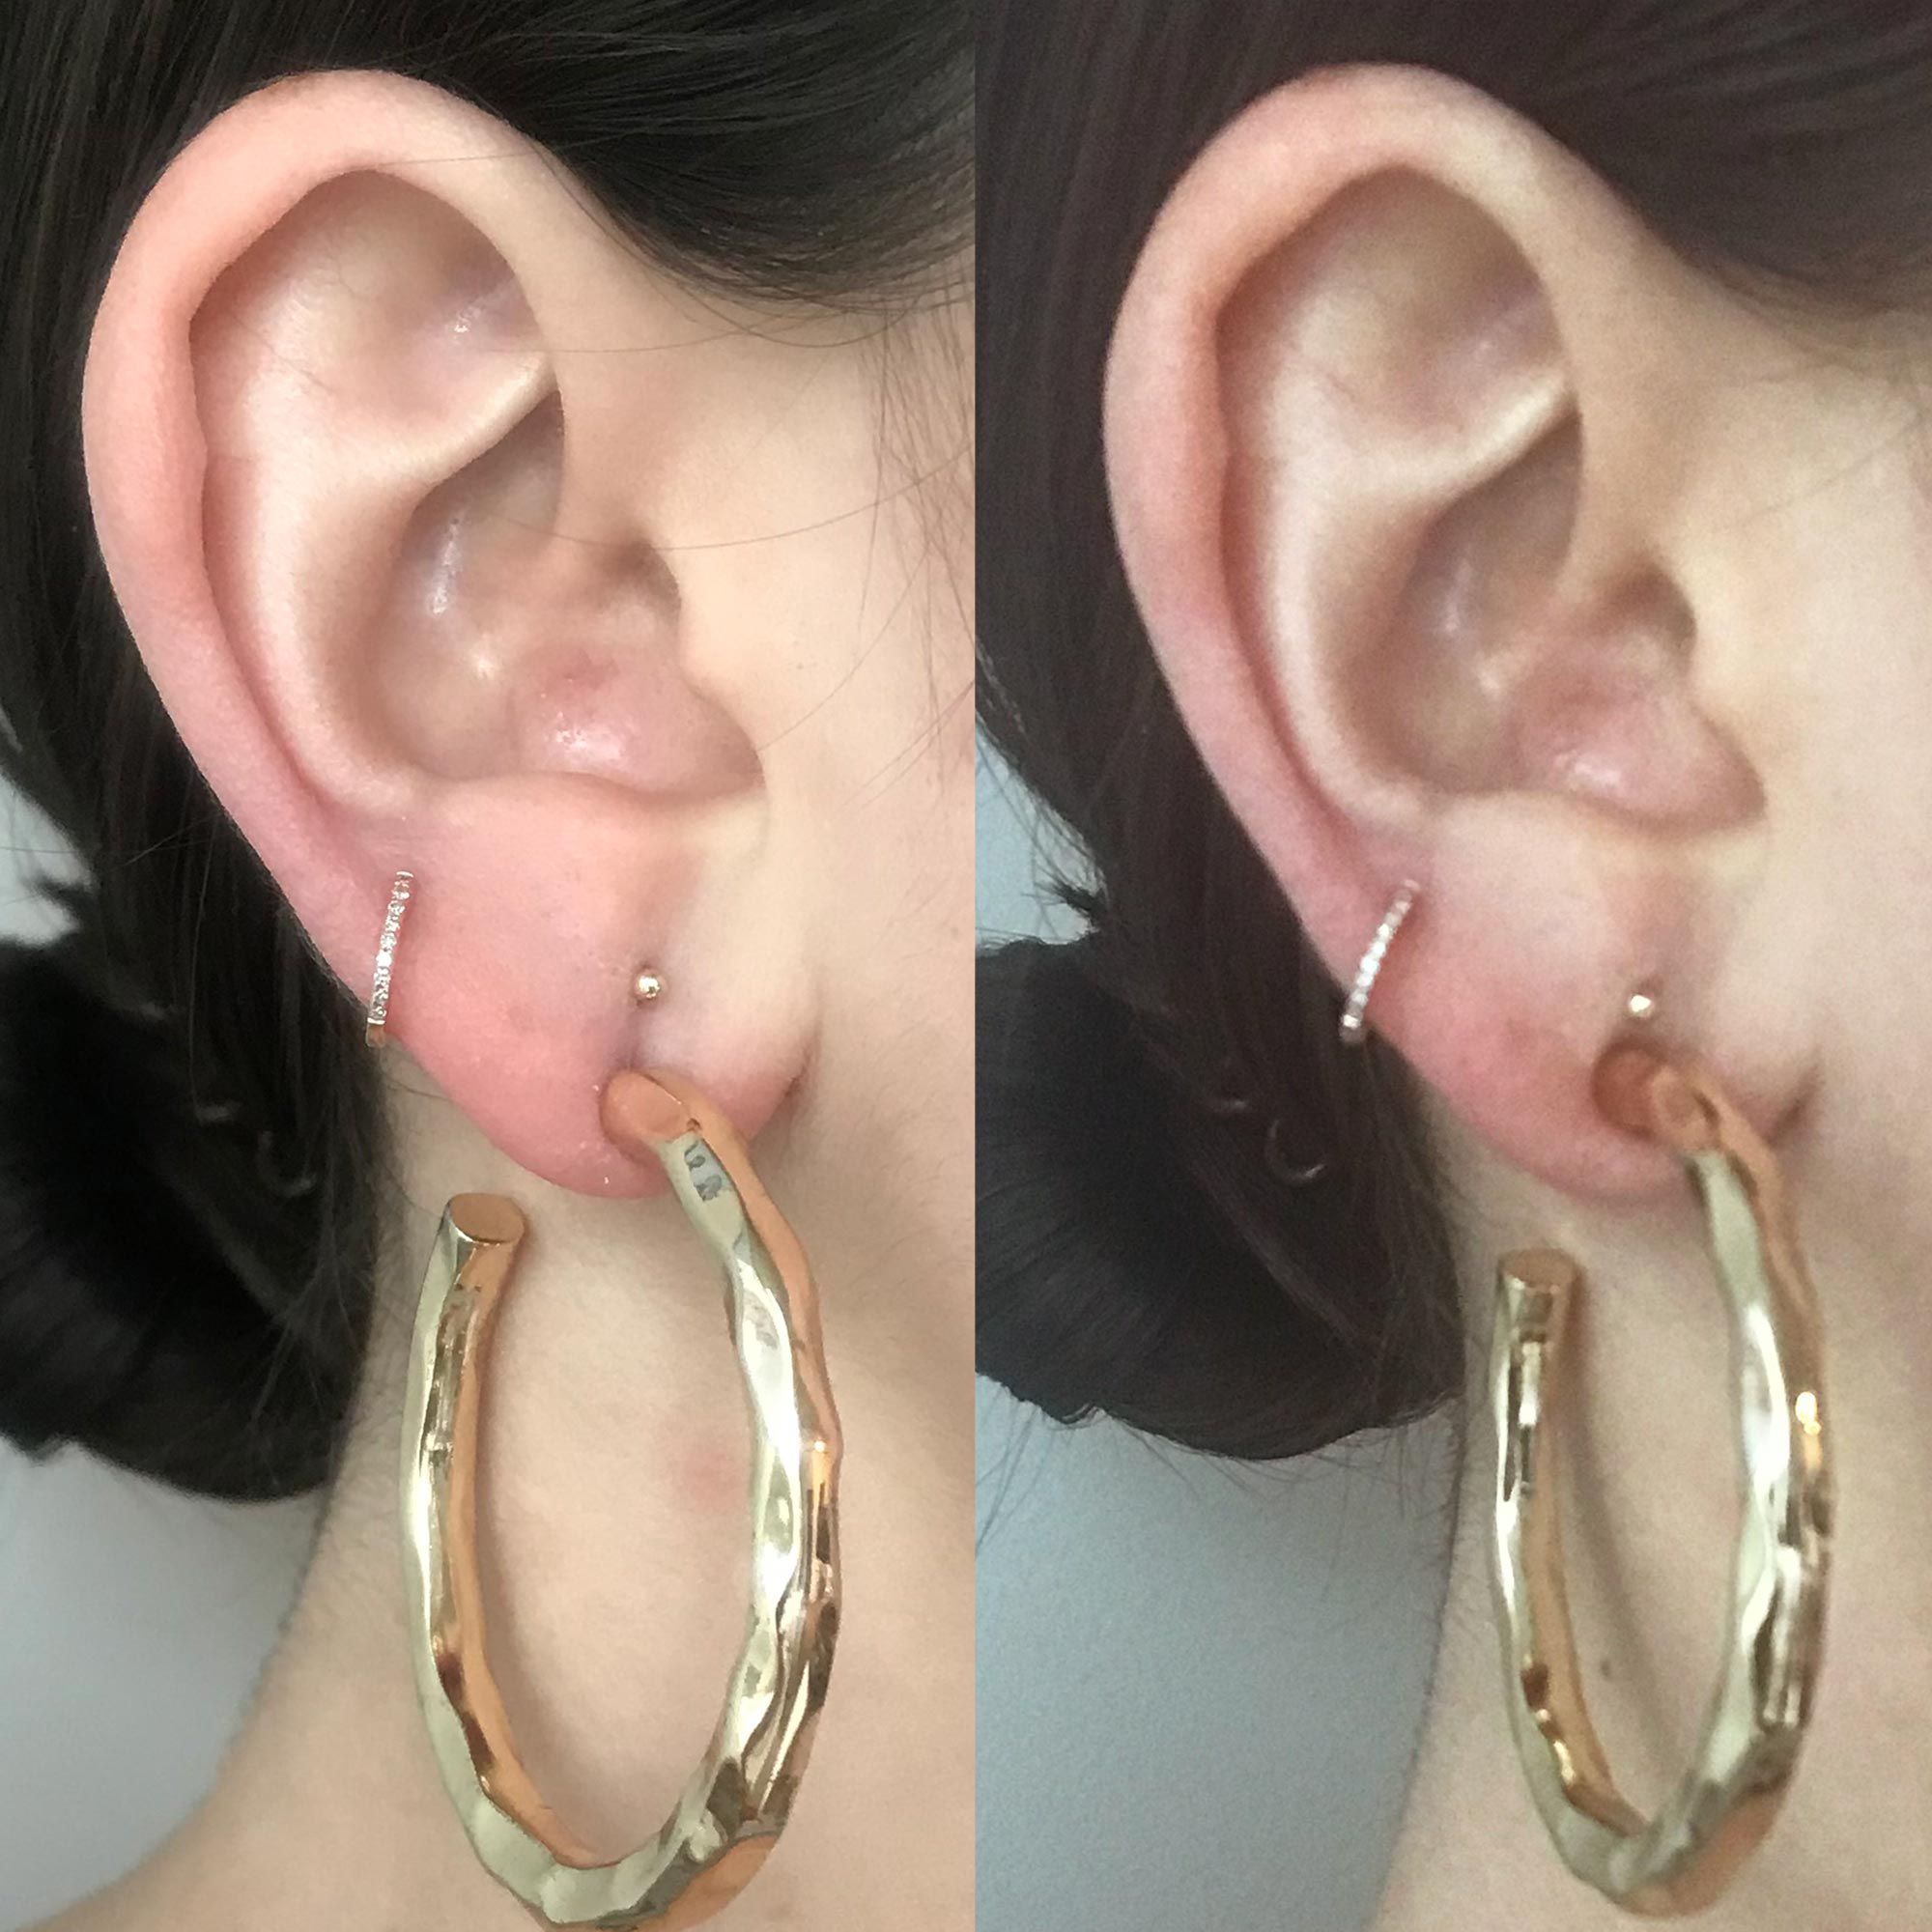 Earring Lifter Backs Lifting Earring Backs Earring Lifters Gold